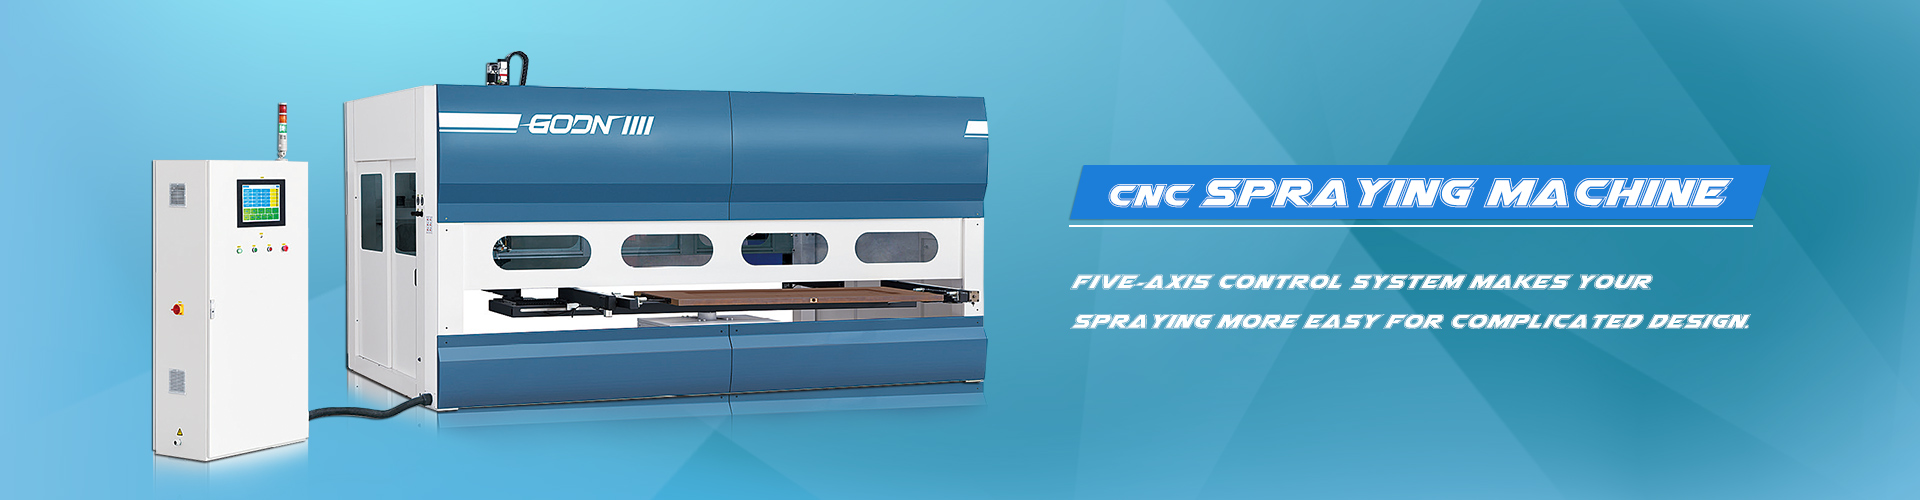 CNC spraying machine